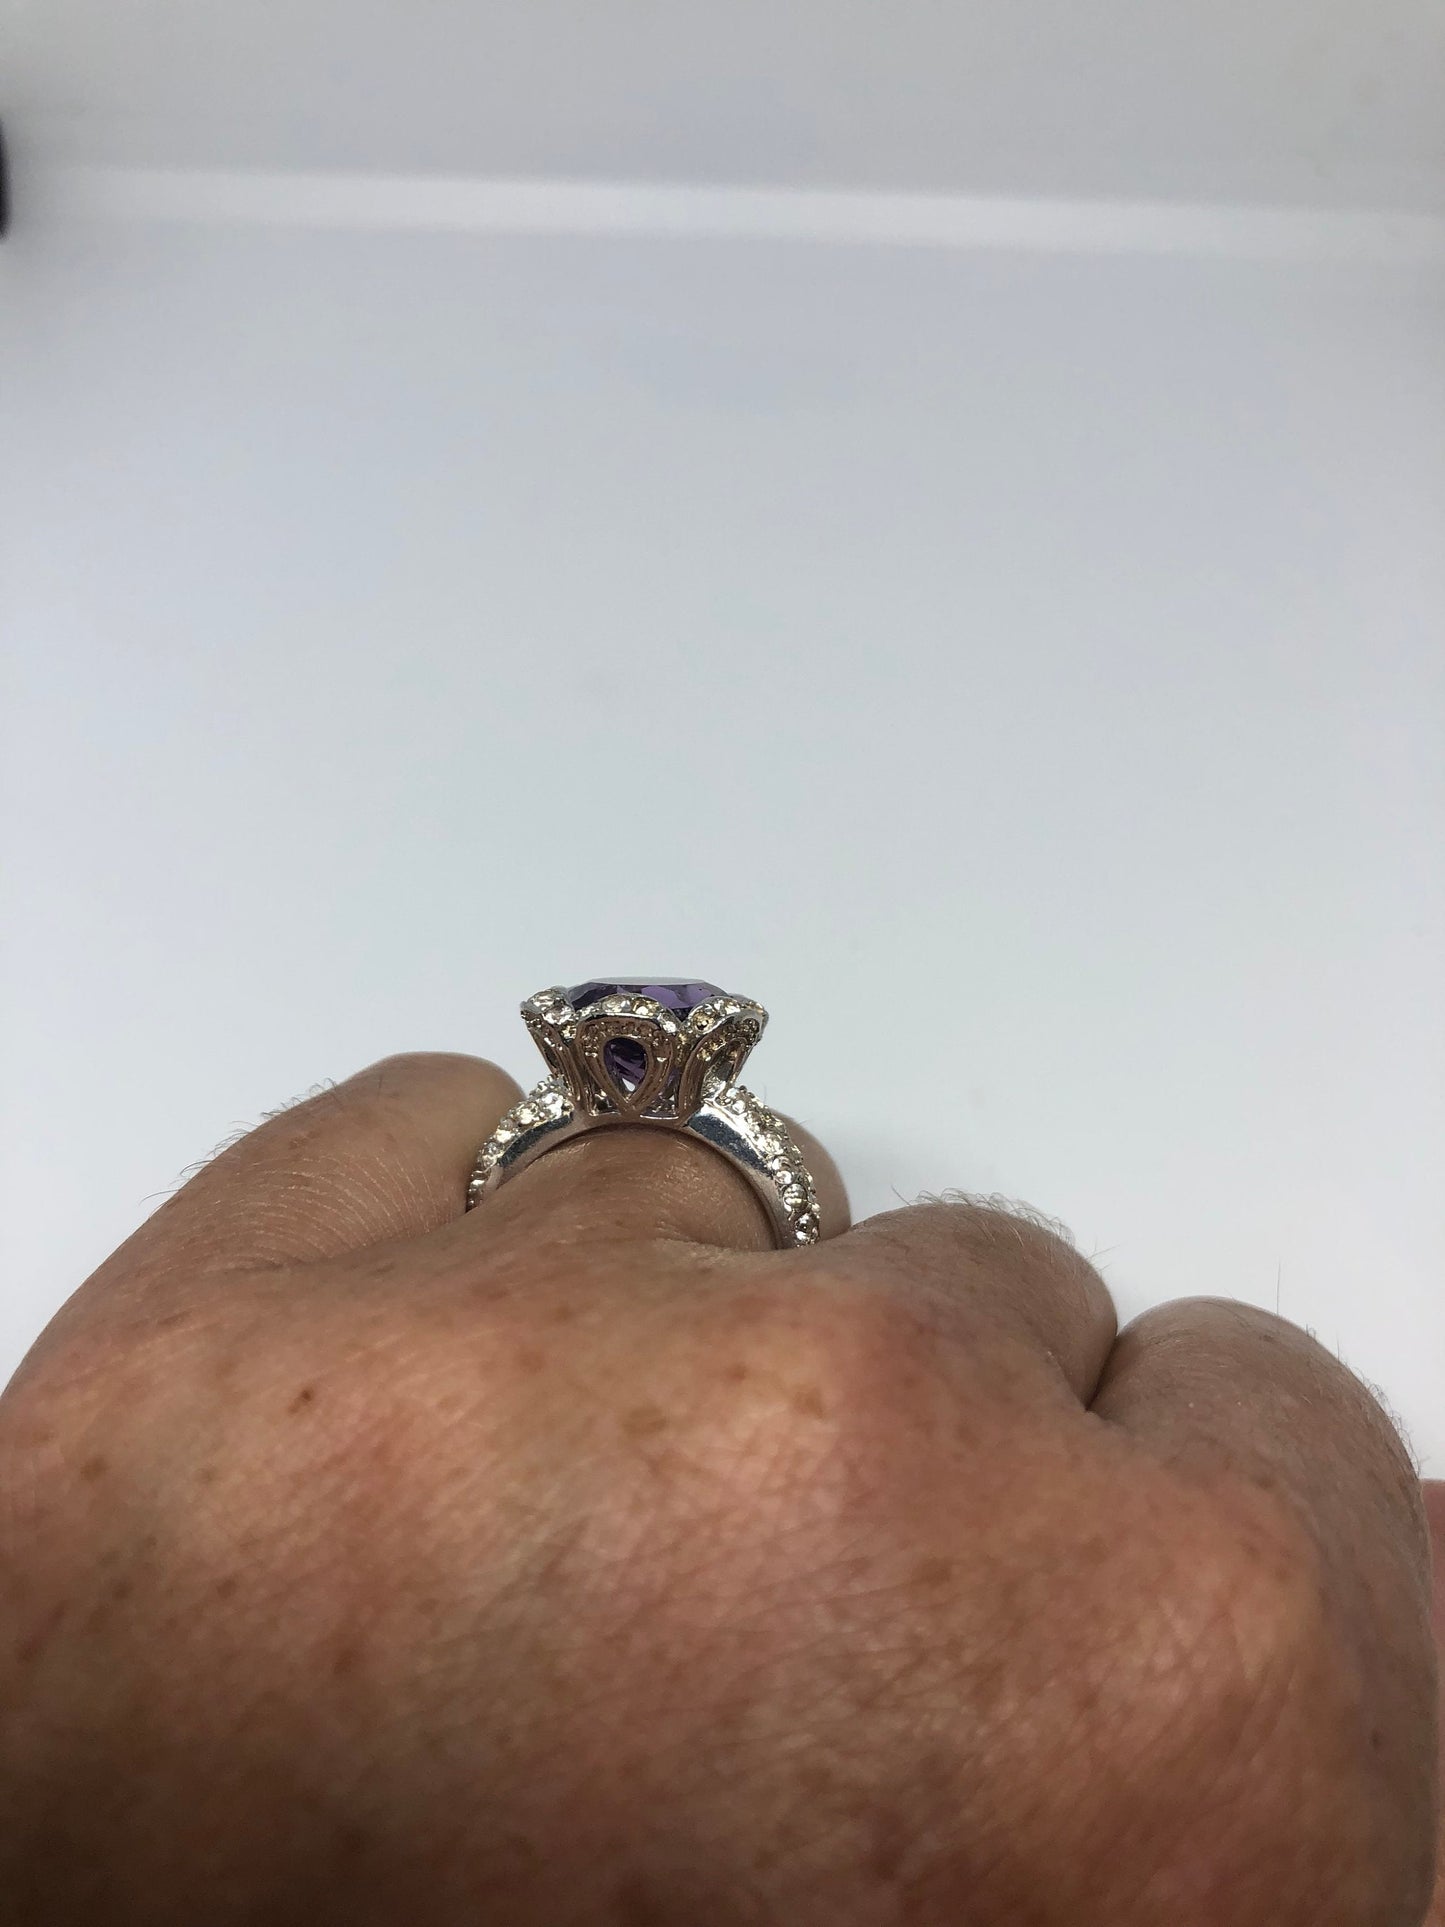 Vintage Handmade deep purple genuine Amethyst setting 925 Sterling Silver gothic Ring